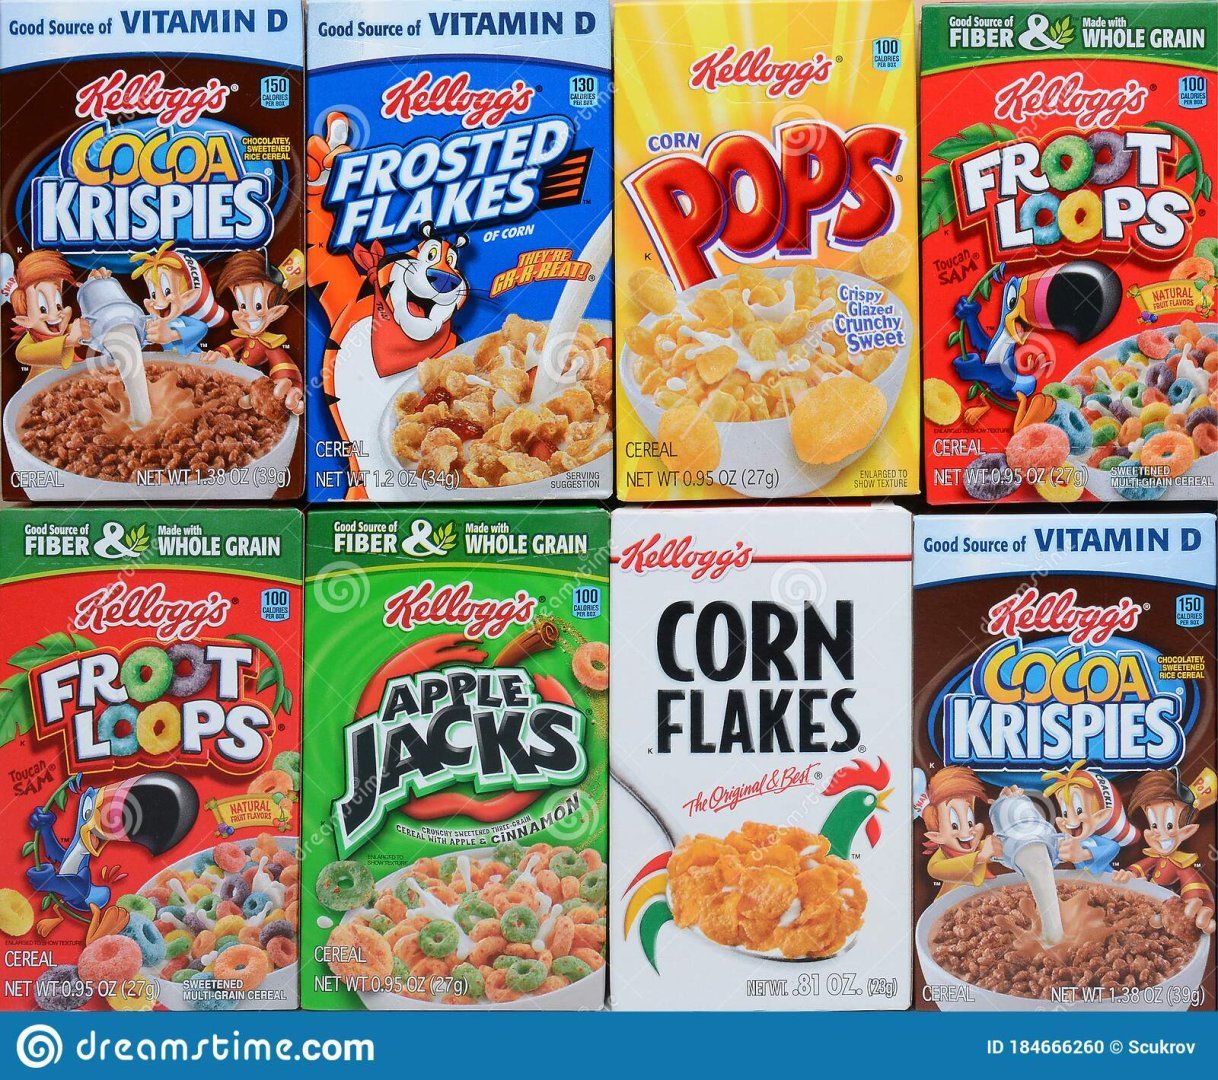 kellogg-s-cereals-irvine-california-march-kellogg-s-cereal-boxes-variety-kellogg-s-single-serv...jpg